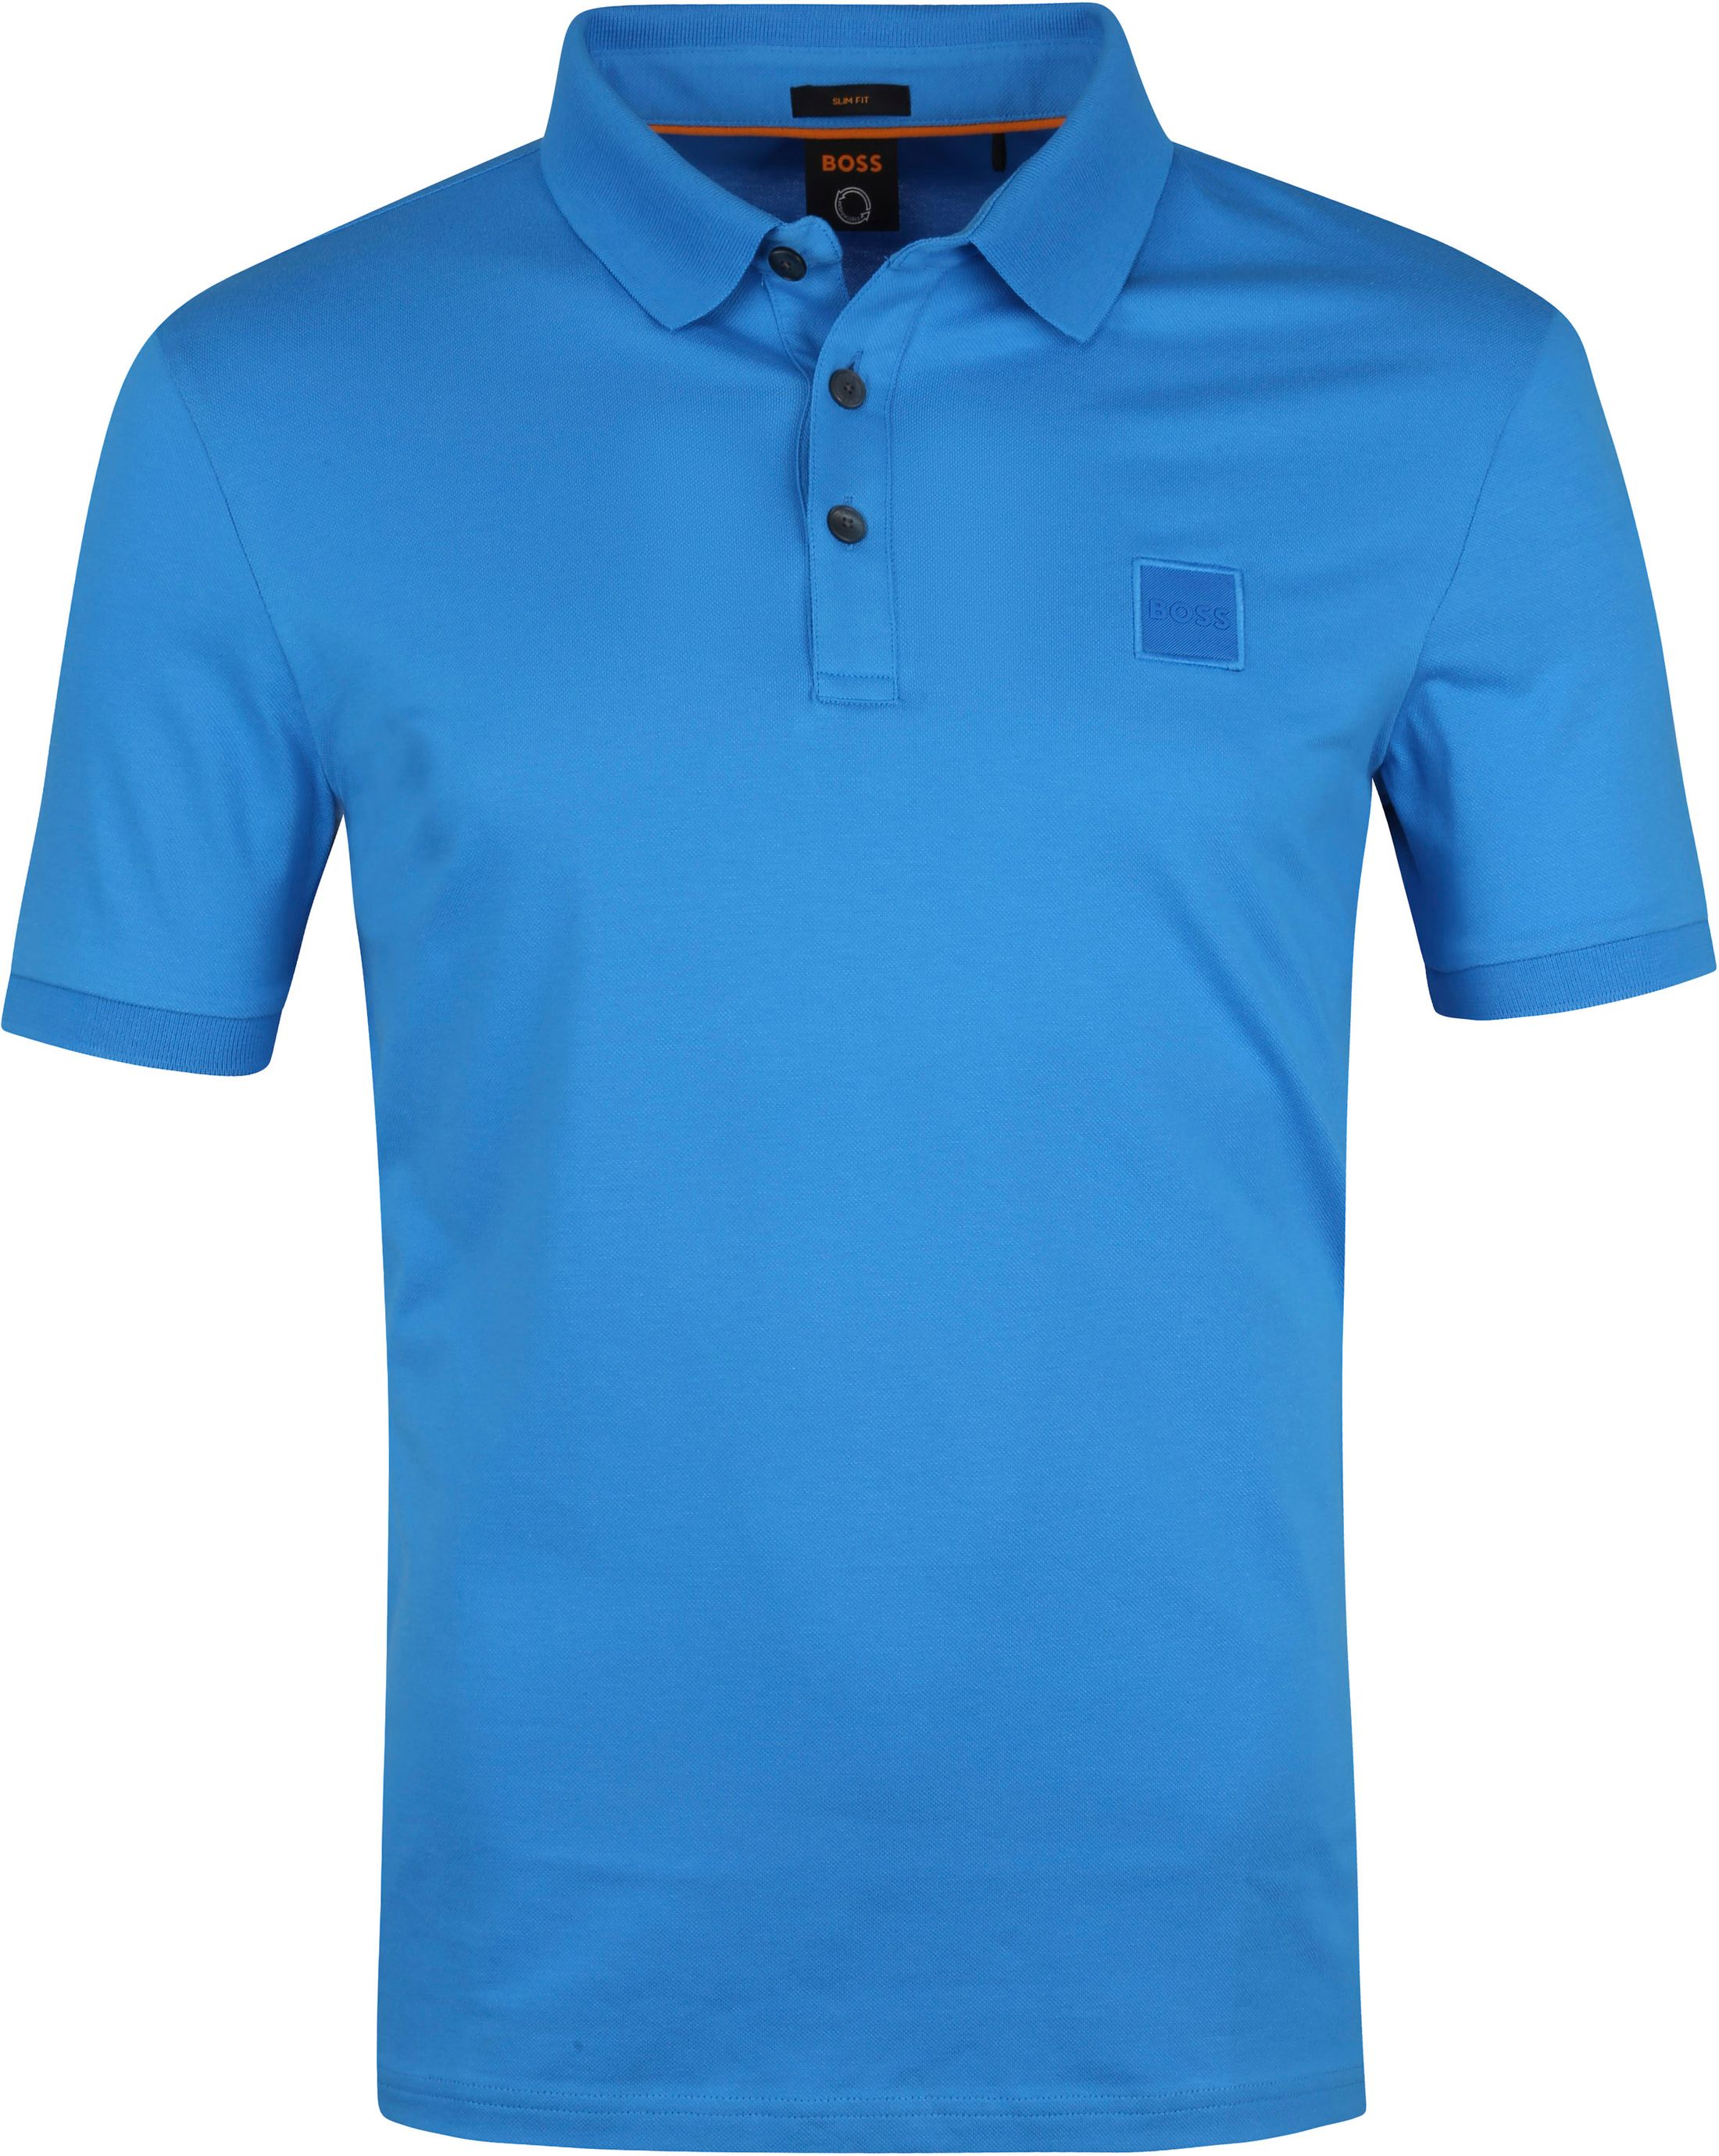 Hugo Boss Polo Shirt Passenger Bright Blue size L